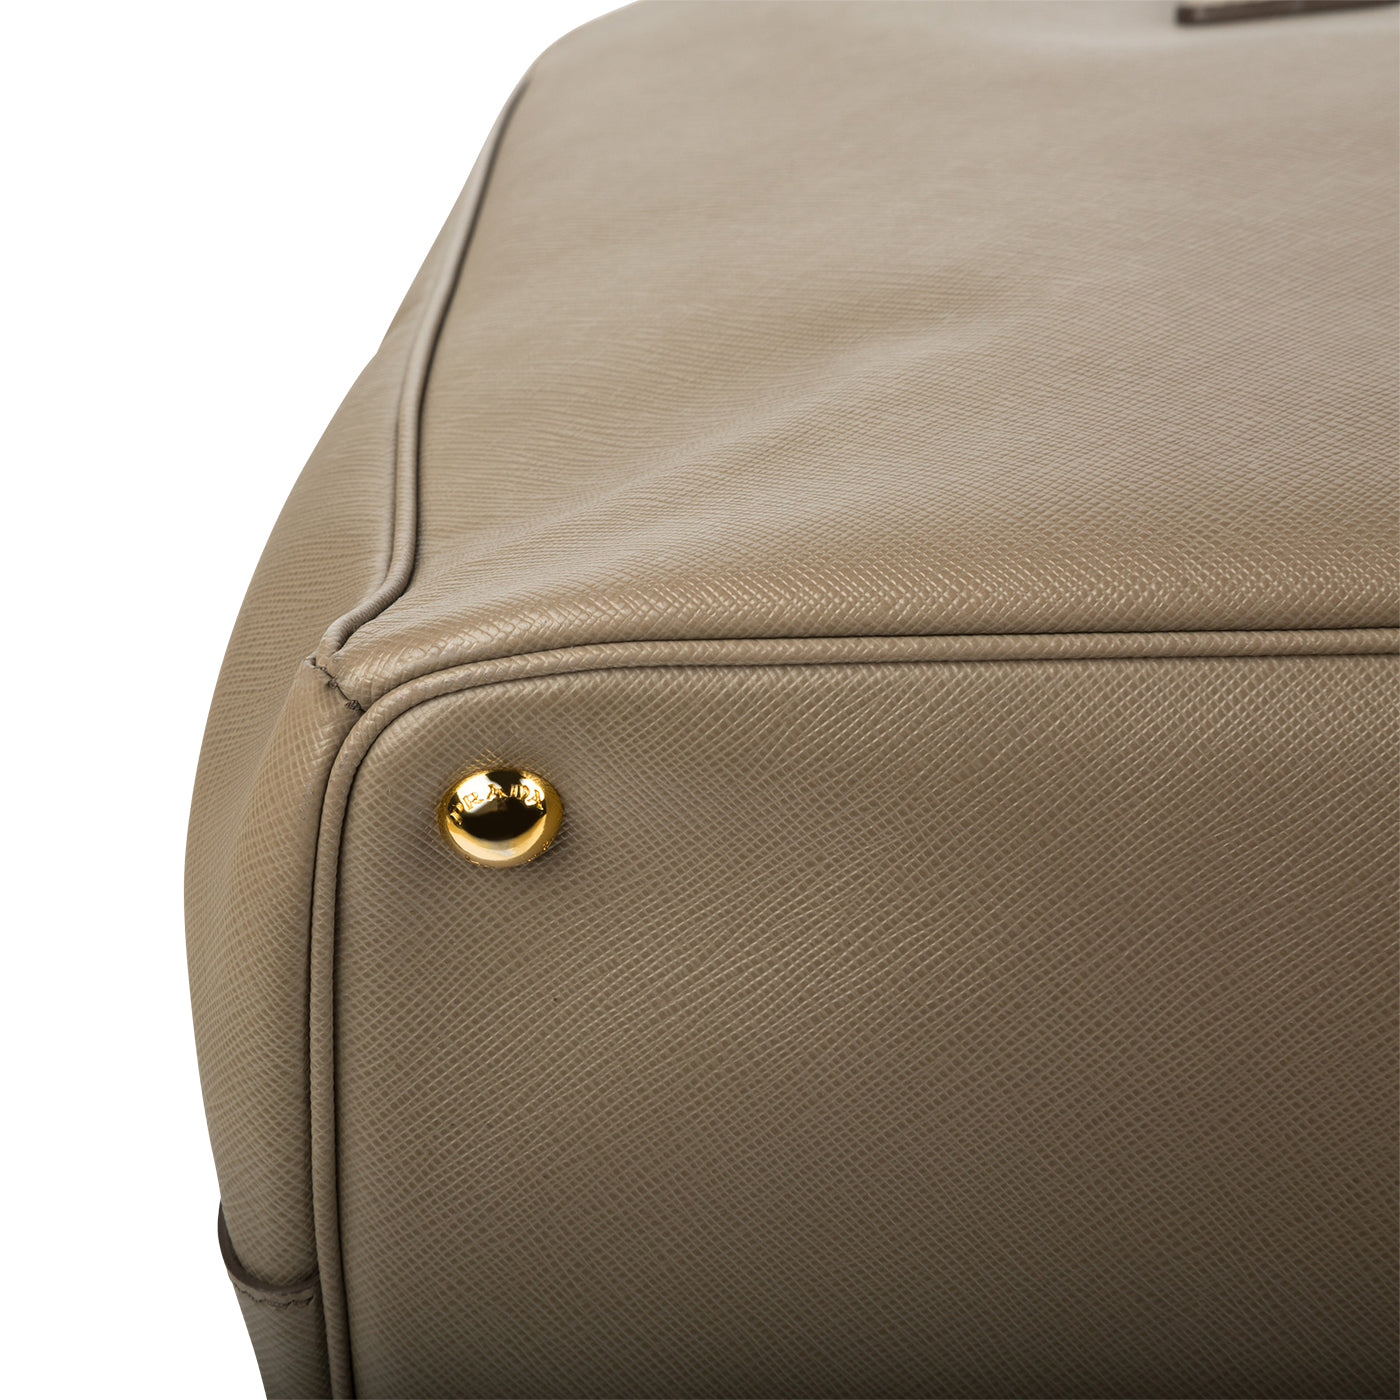 Large Prada Galleria Saffiano Leather Bag 1BA274, Green, One Size